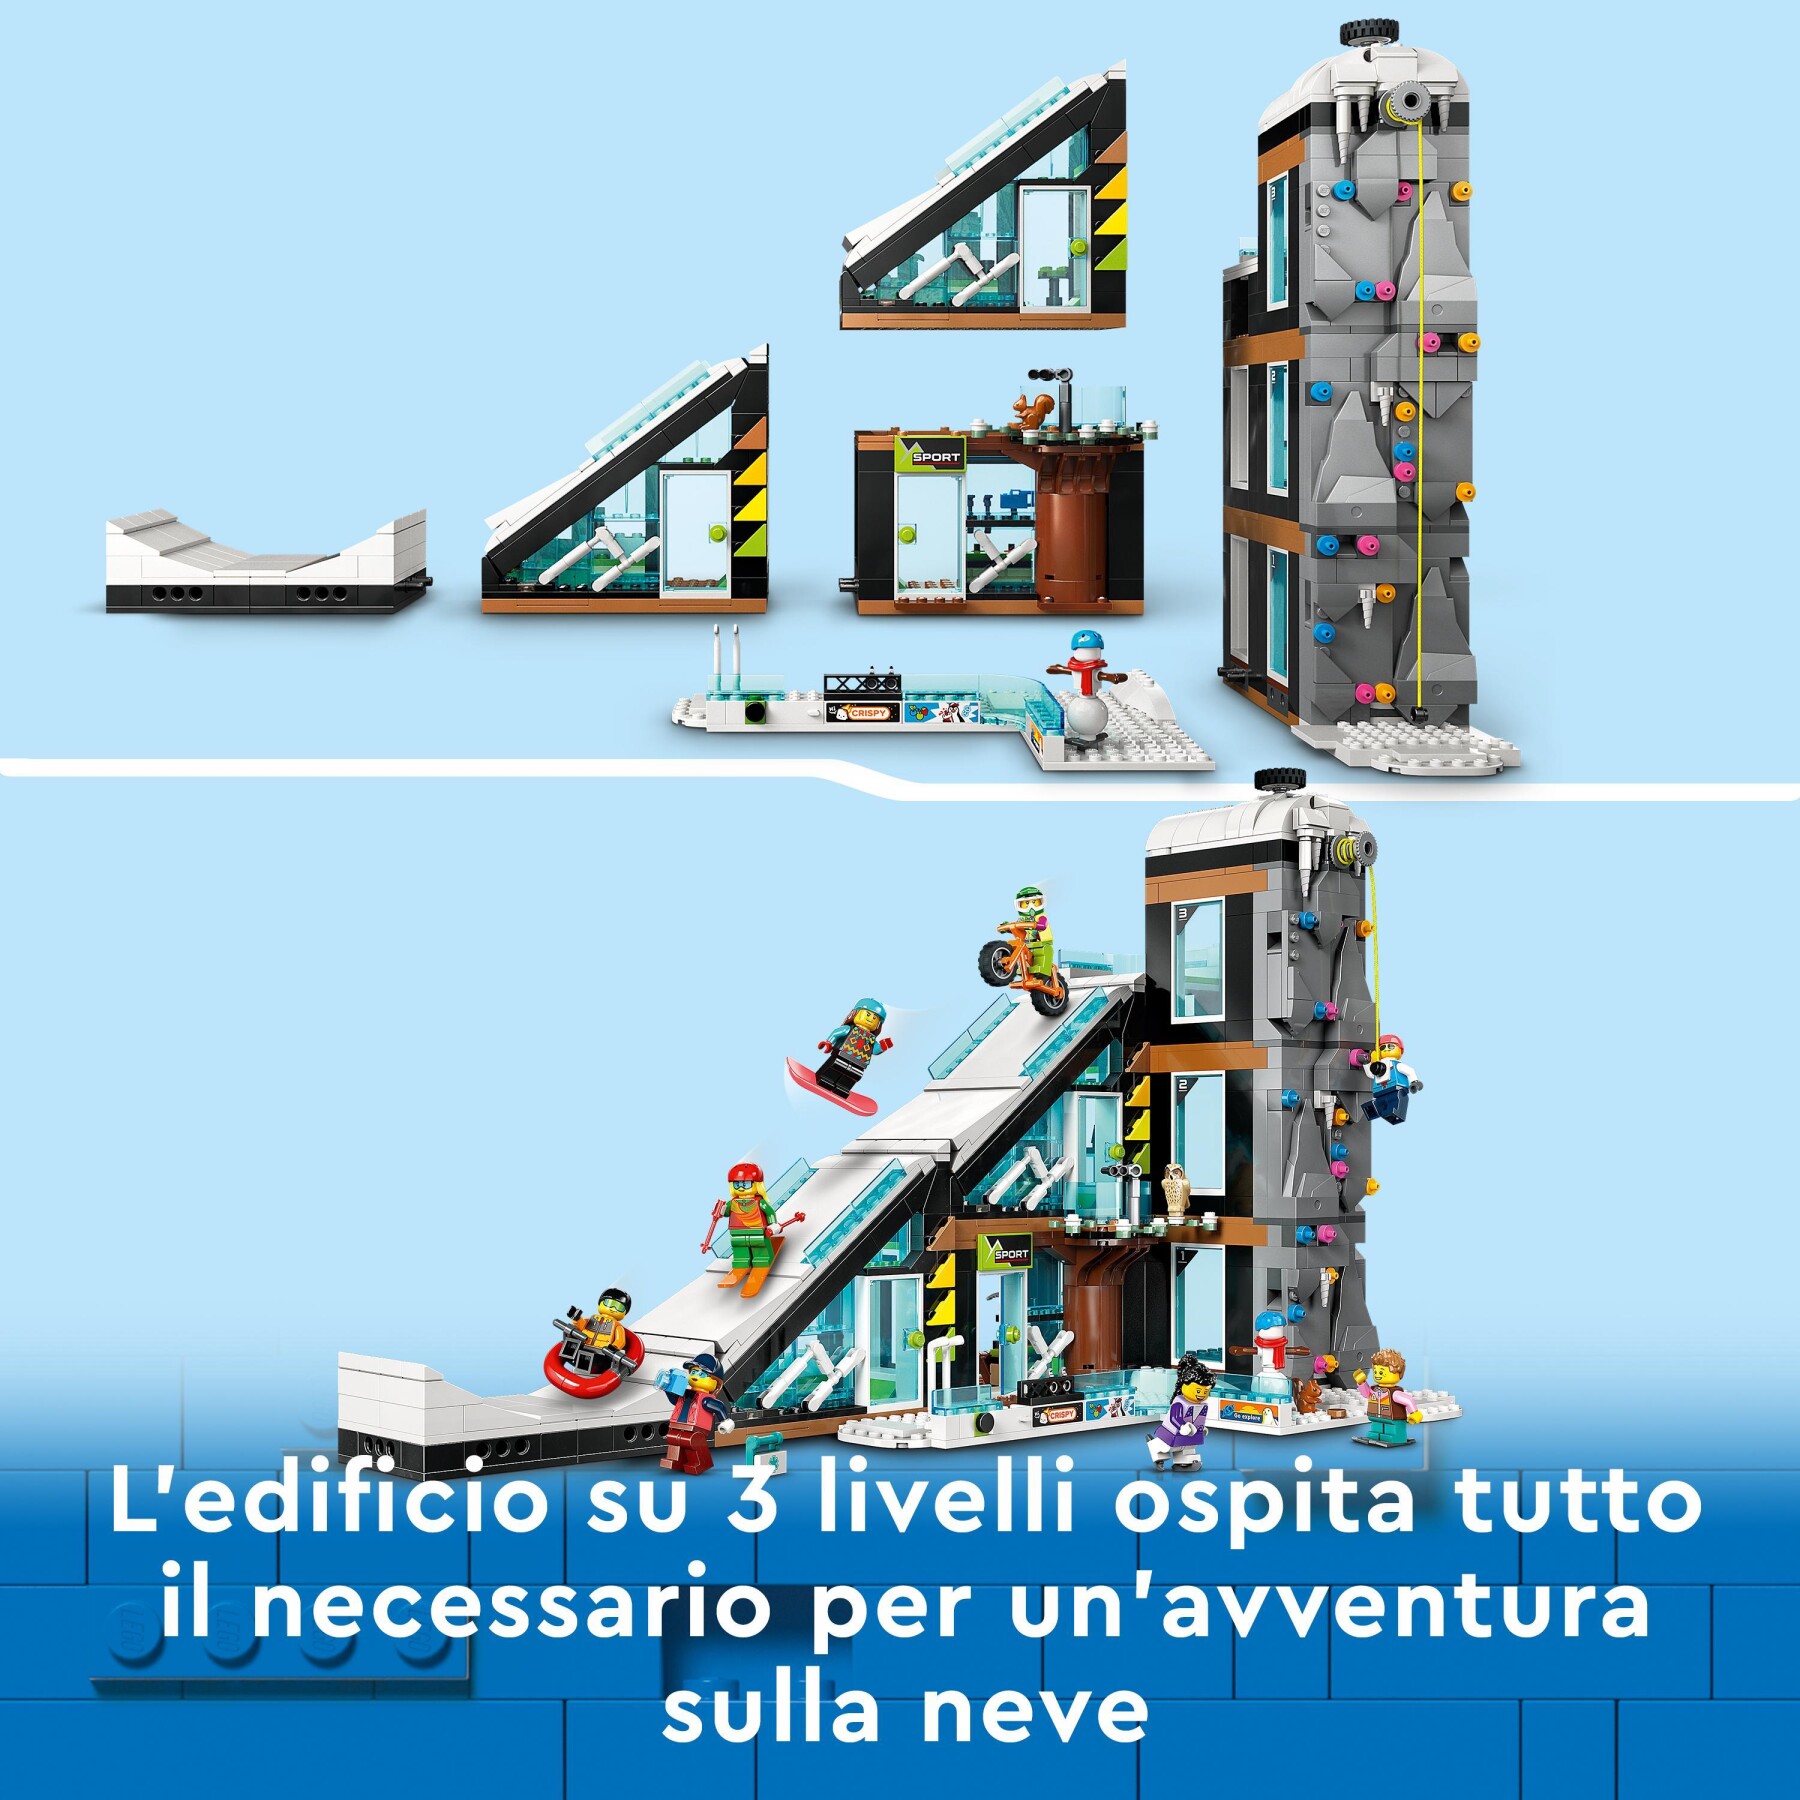 Lego city 60366 centro sci e arrampicata, modular building set a 3 livelli con pista e 8 minifigure, regalo per bambini 7+ - LEGO CITY